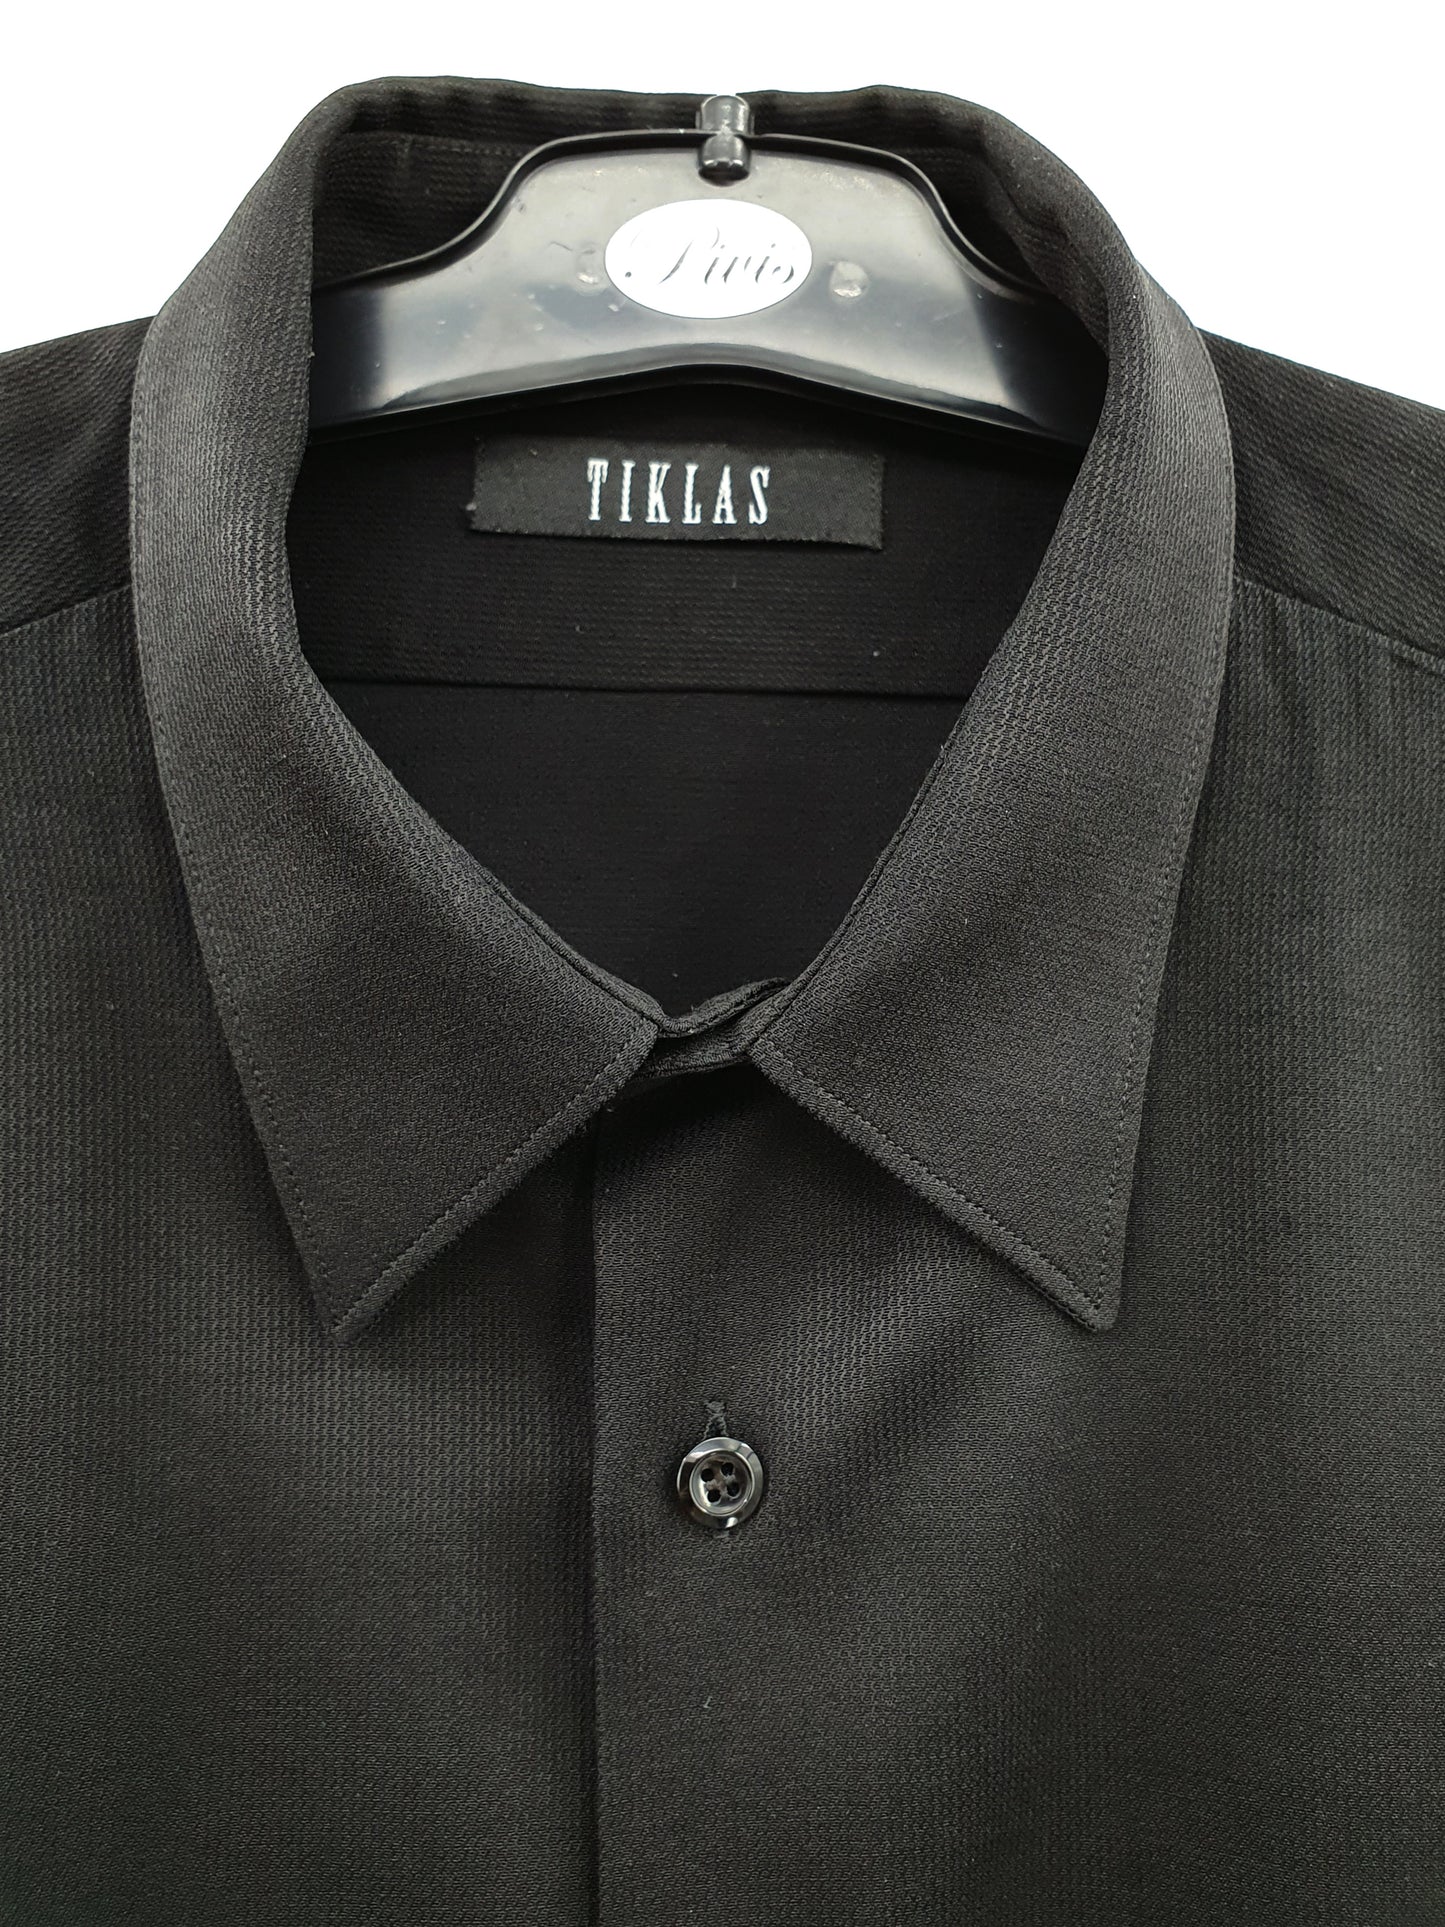 Tiklas, musta miesten paitapusero, 90-luku, koko M-L